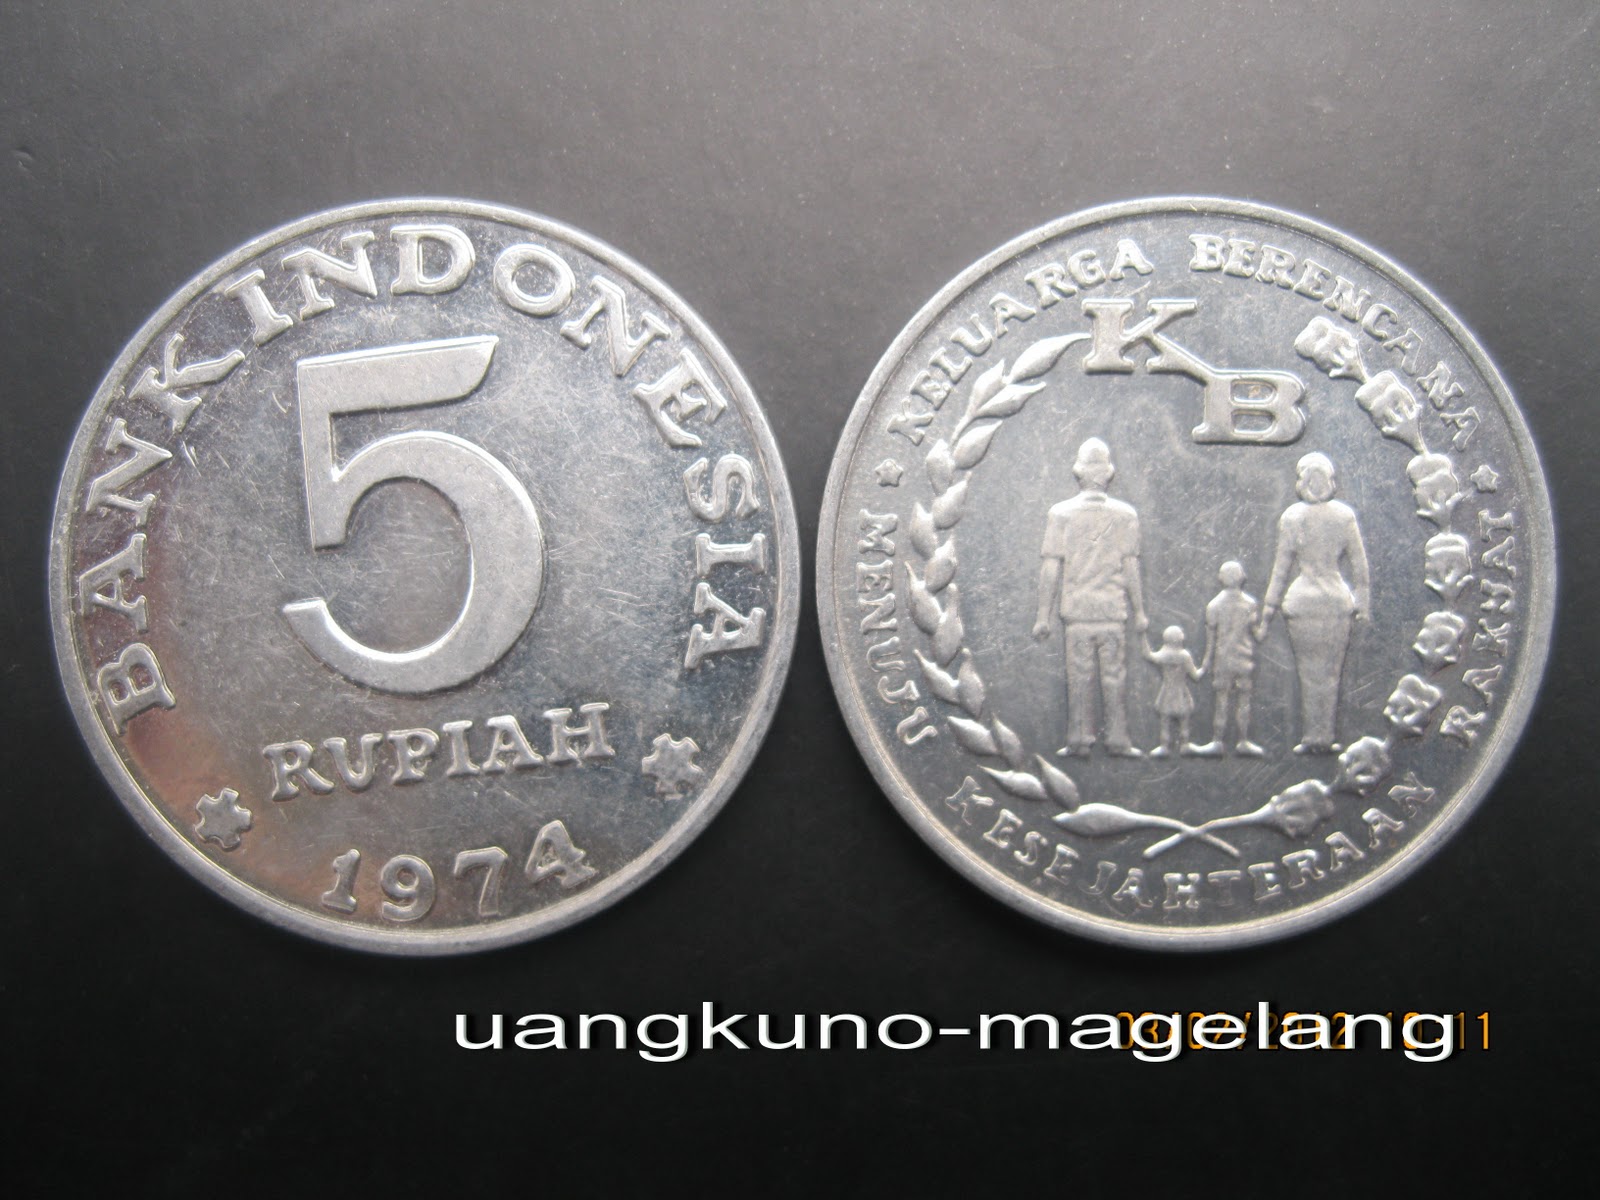 Uangkuno-magelang: 6. Uang Logam/Koin Indonesia